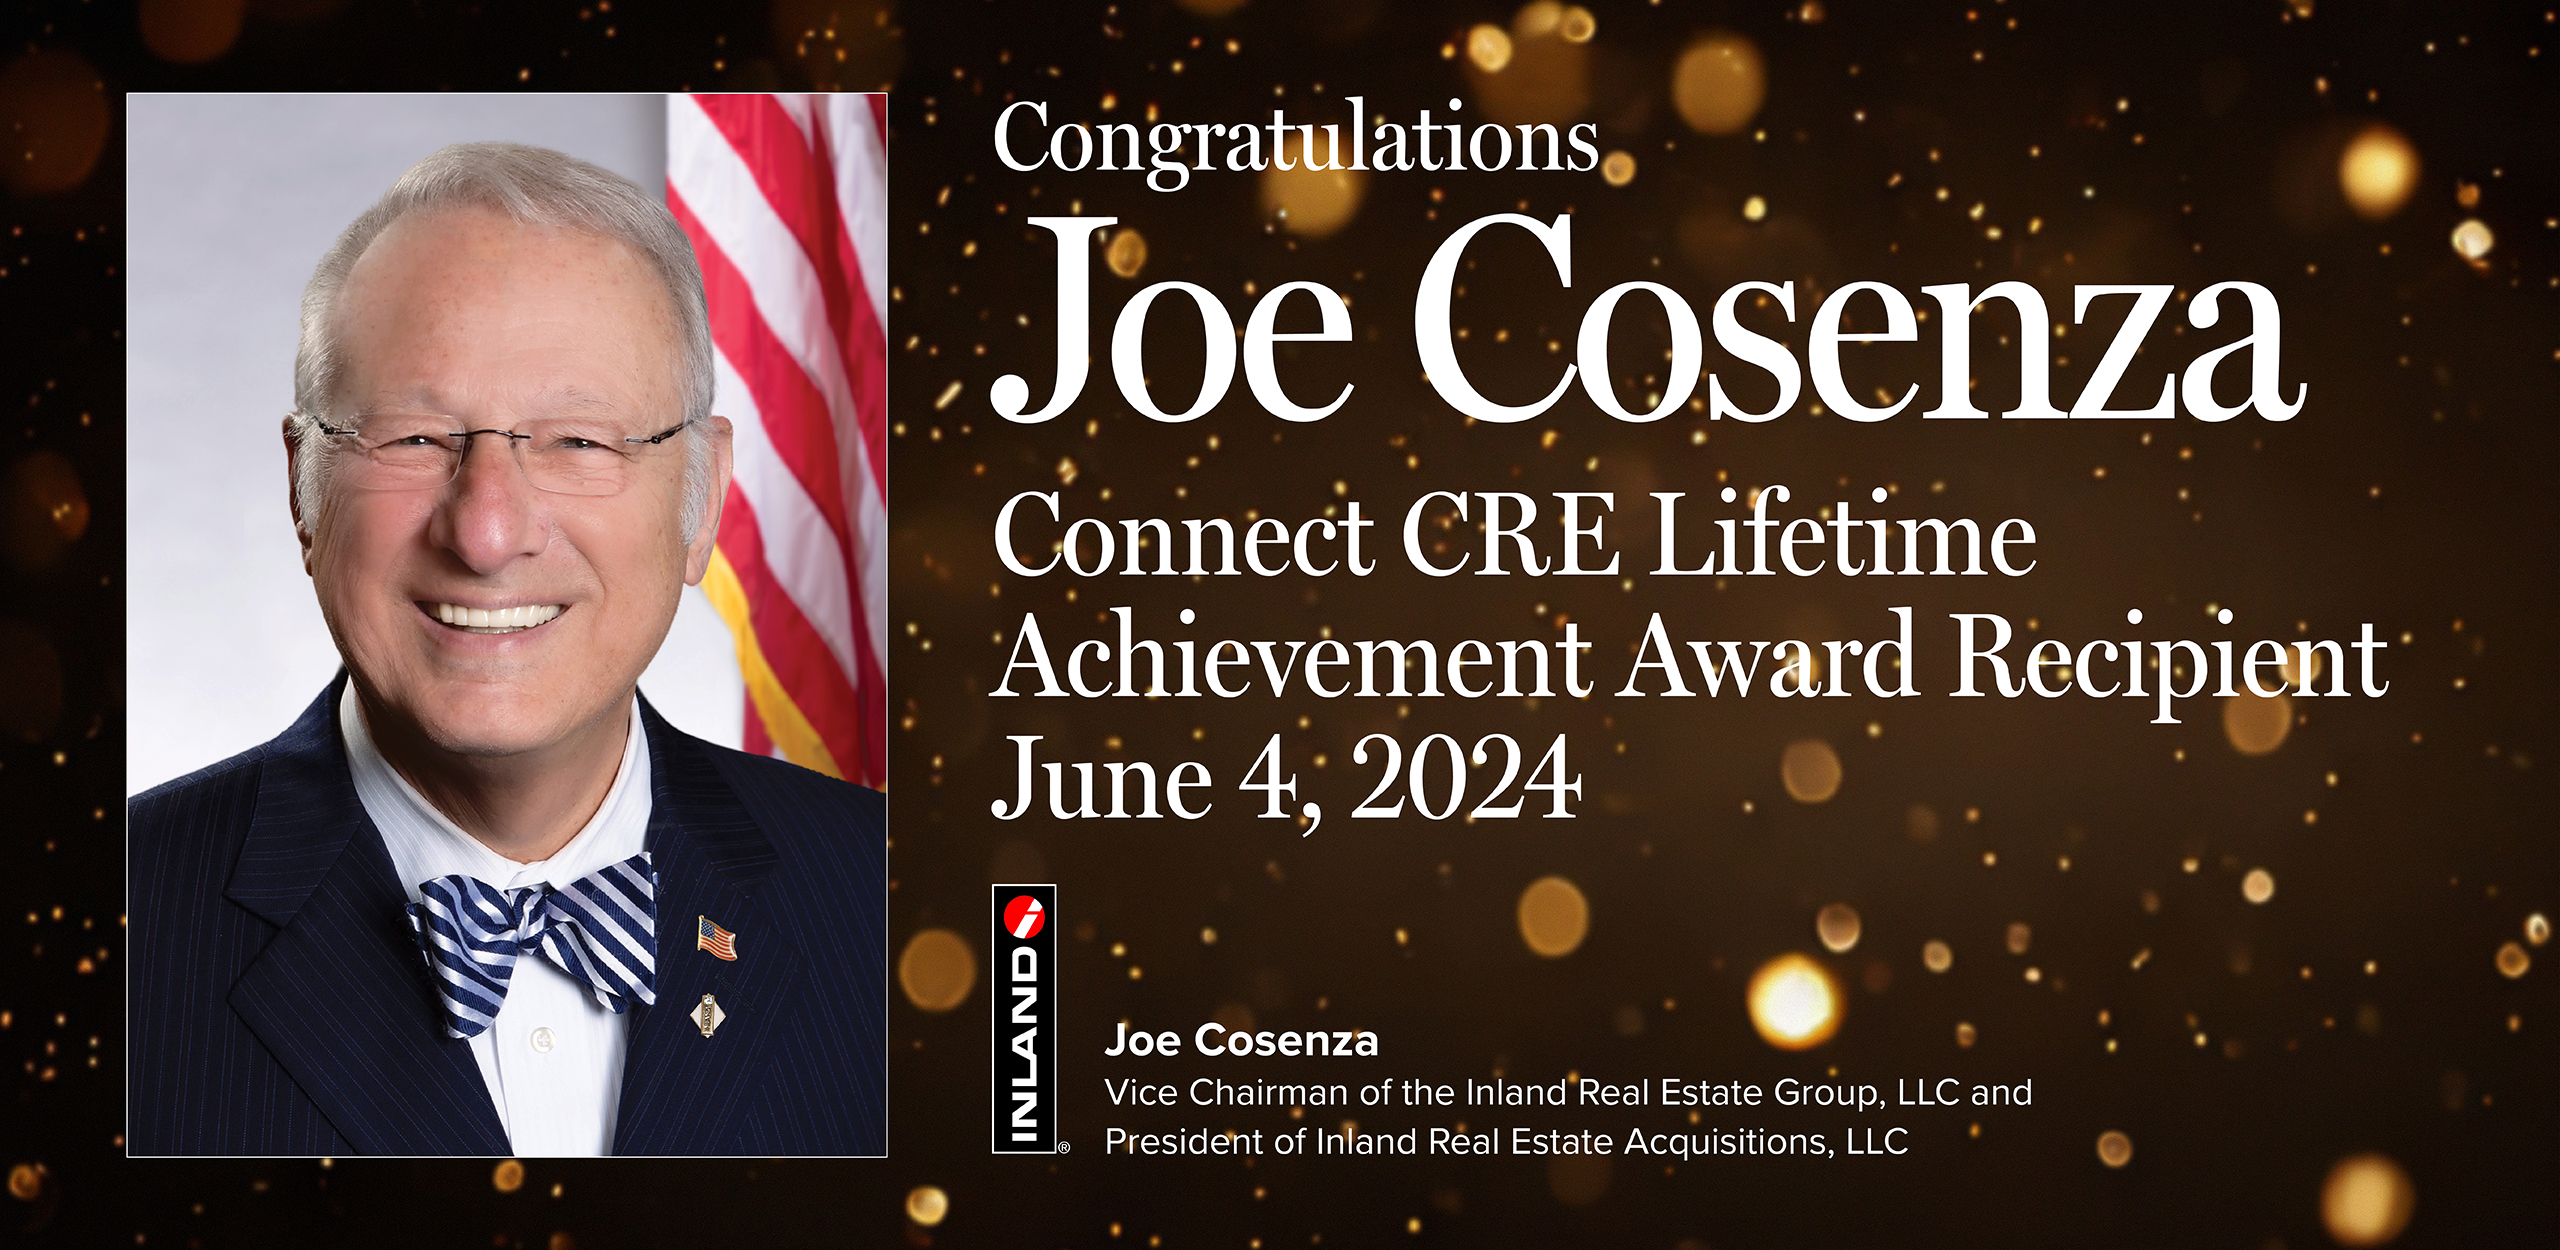 Joe Cosenza Connect CRE Lifetime Achievement Award